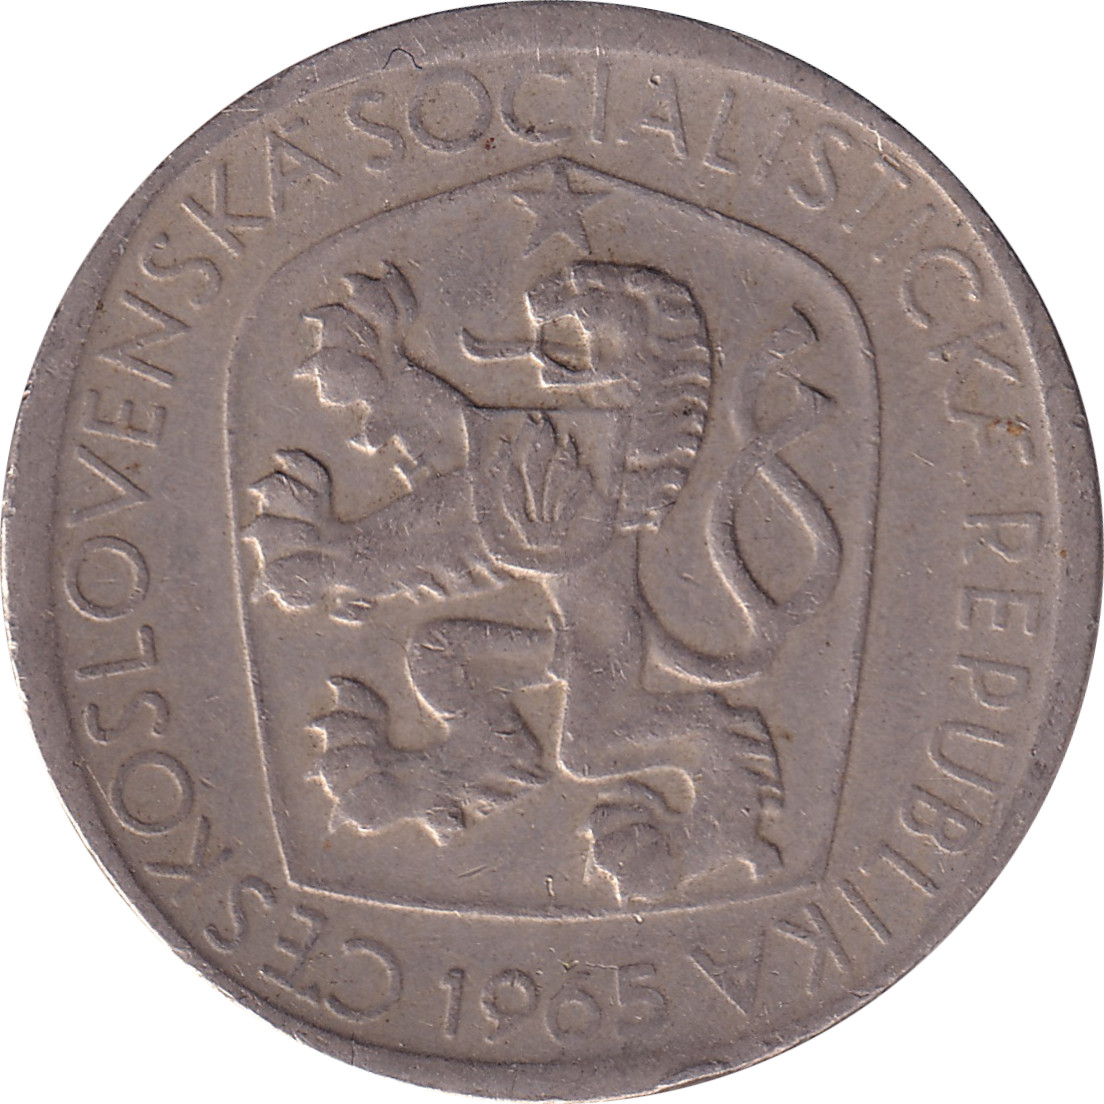 3 koruny - Heraldic Lion